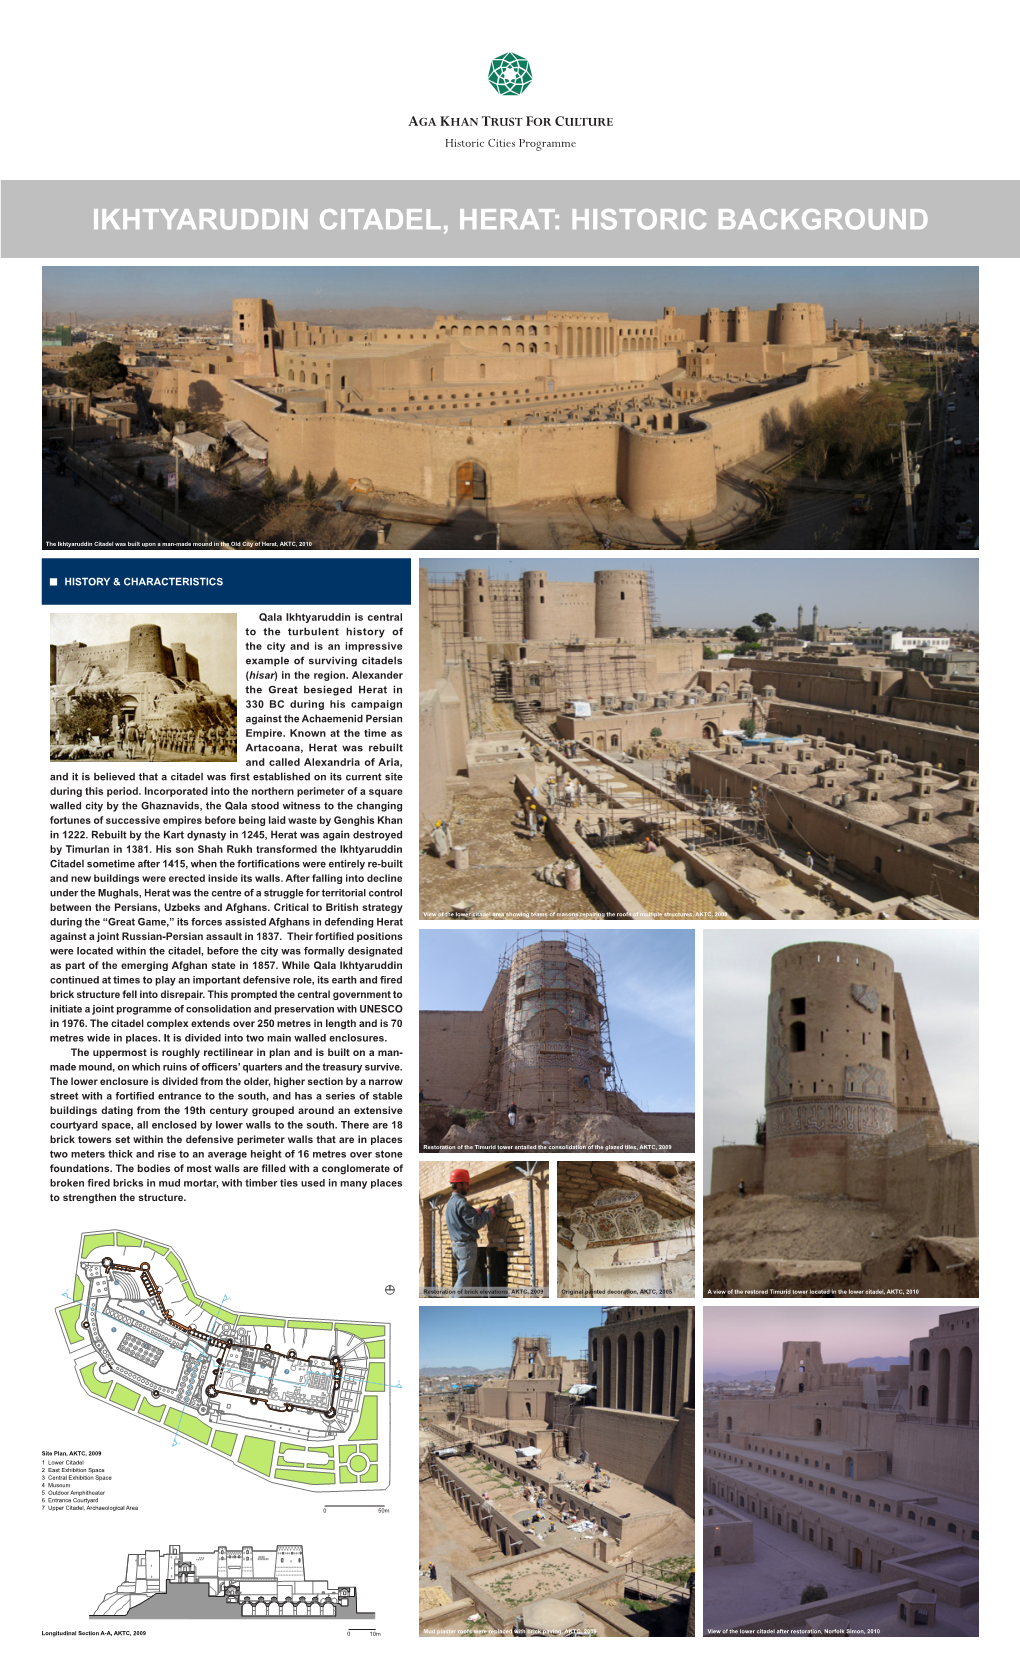 Ikhtyaruddin Citadel, Herat: Historic Background